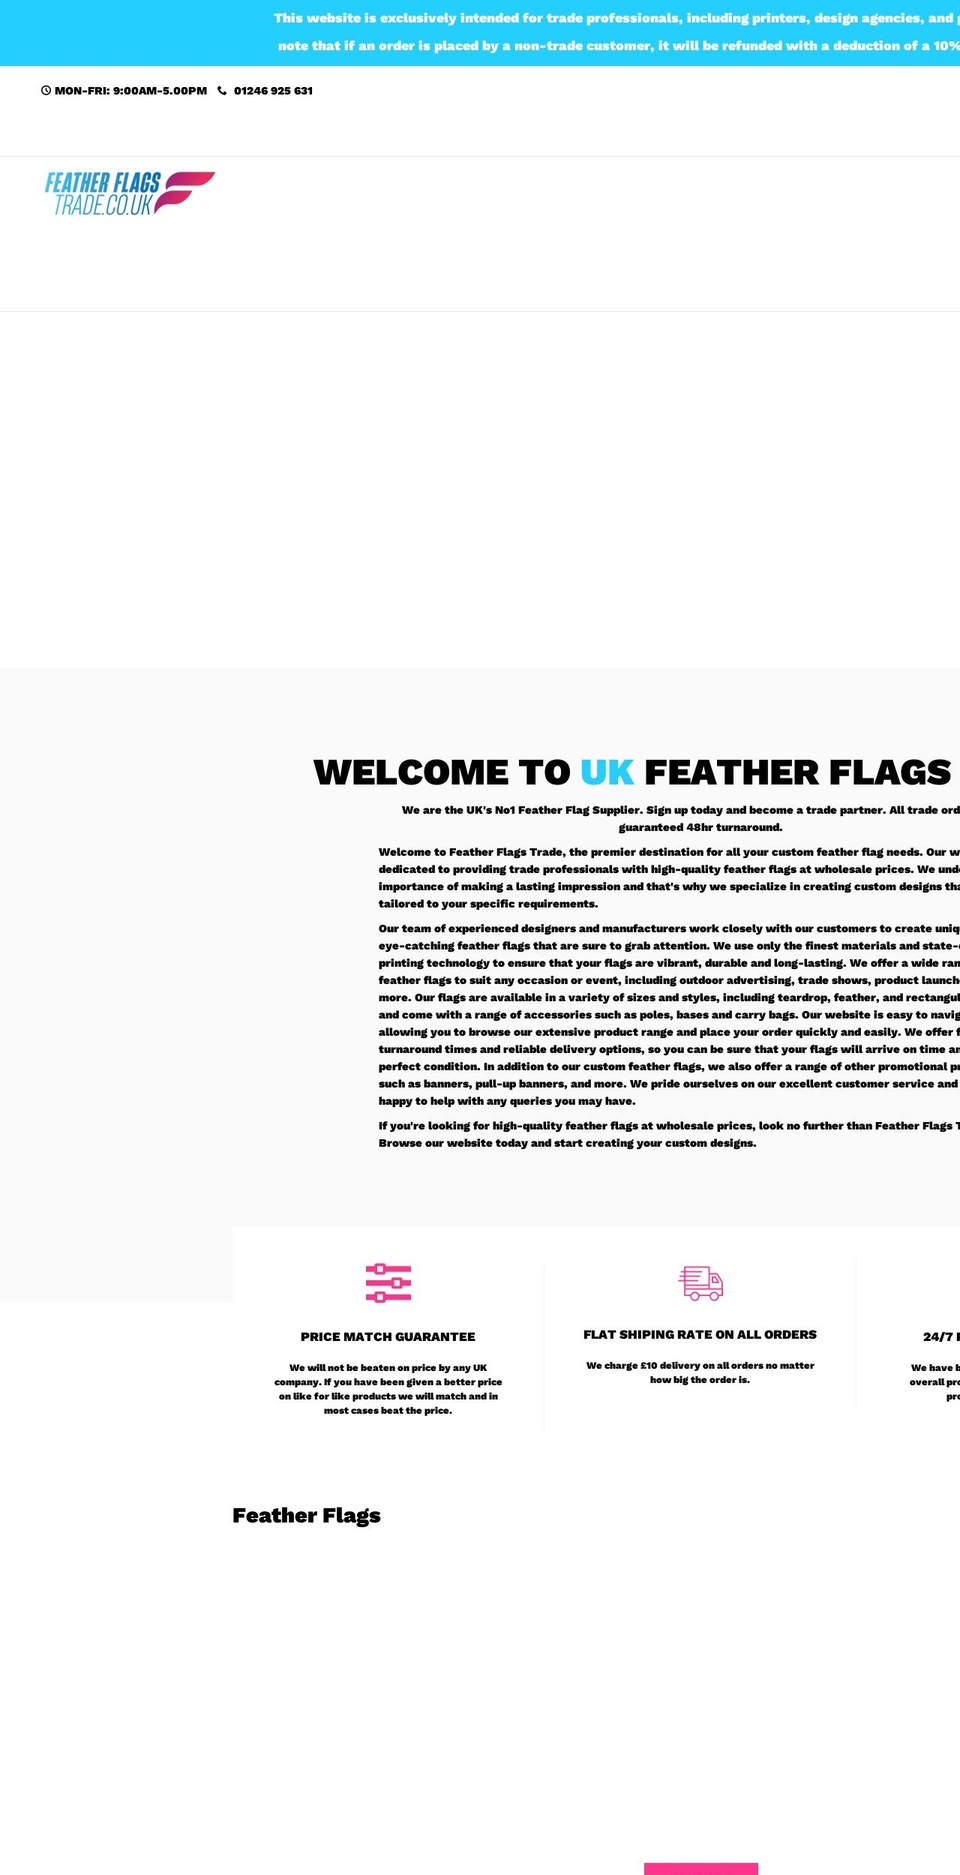 featherflagstrade.co.uk shopify website screenshot